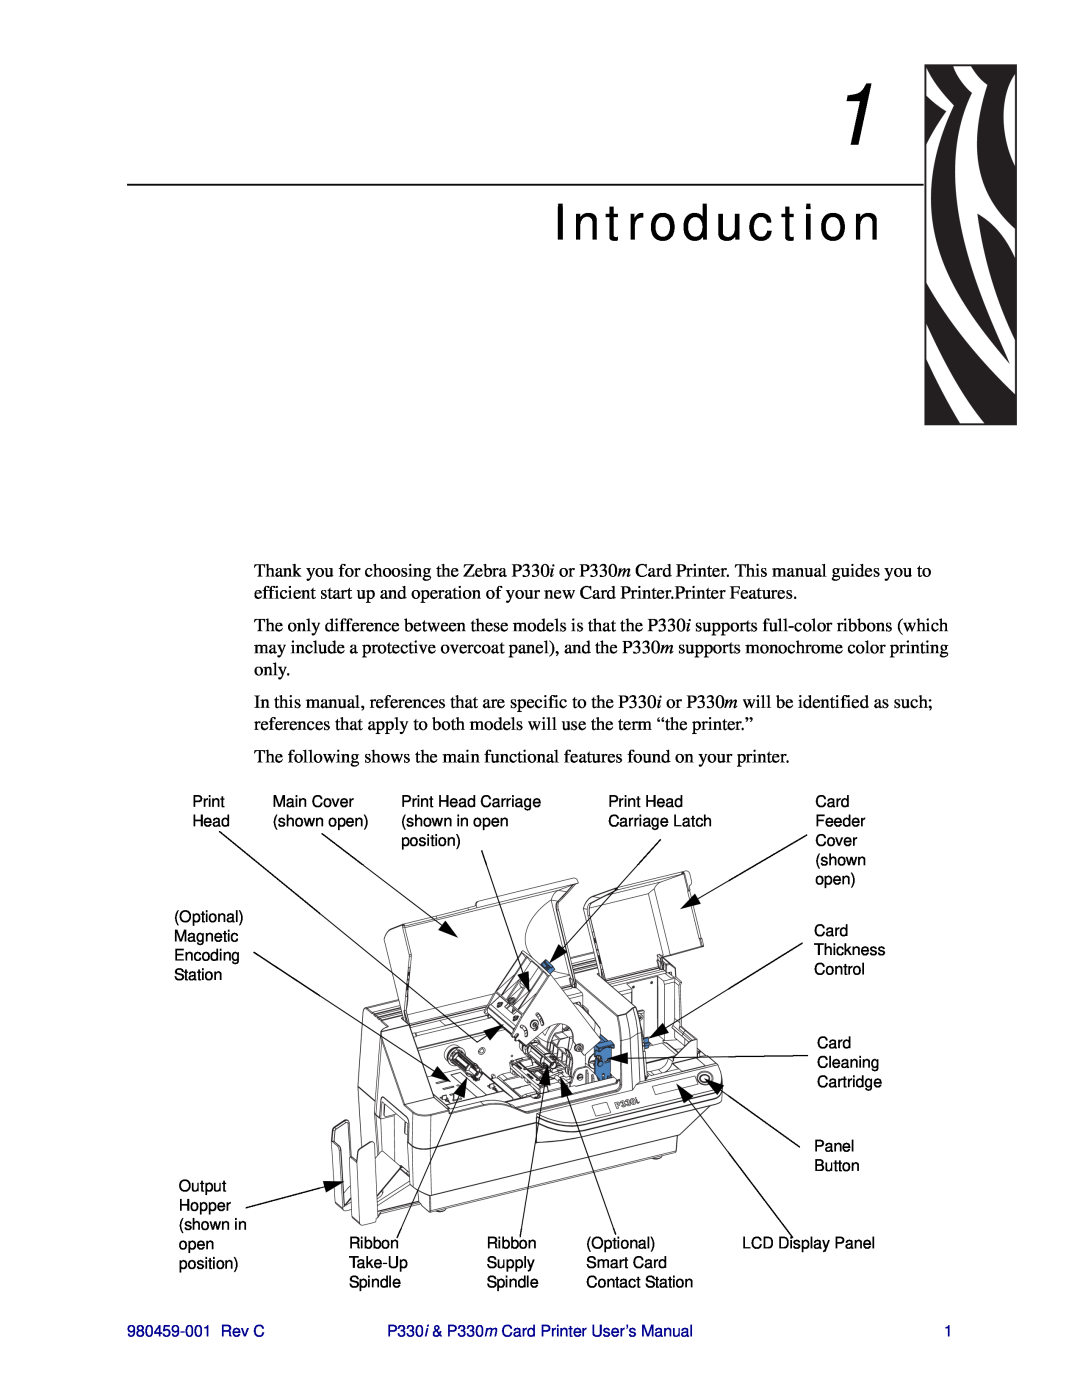 Zebra Technologies P330m, P330i user manual Introduction, Ribbon, Spindle 